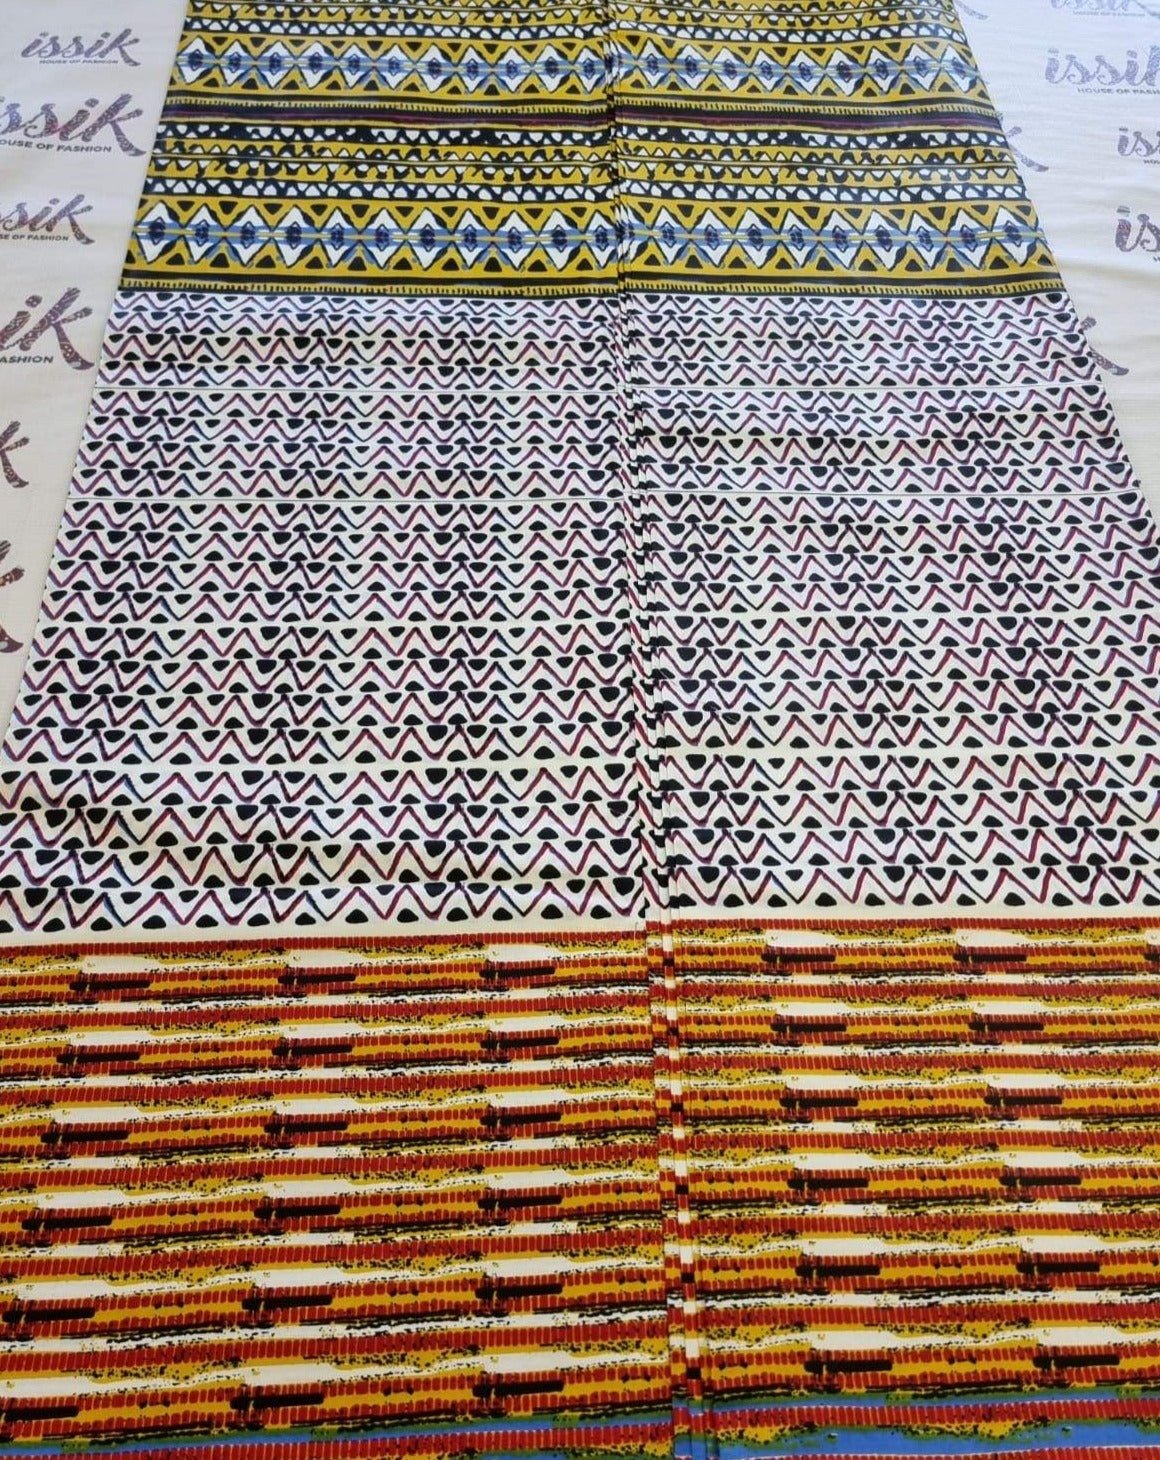 Multicolor Ankara fabric - ak290246 - House of Prints